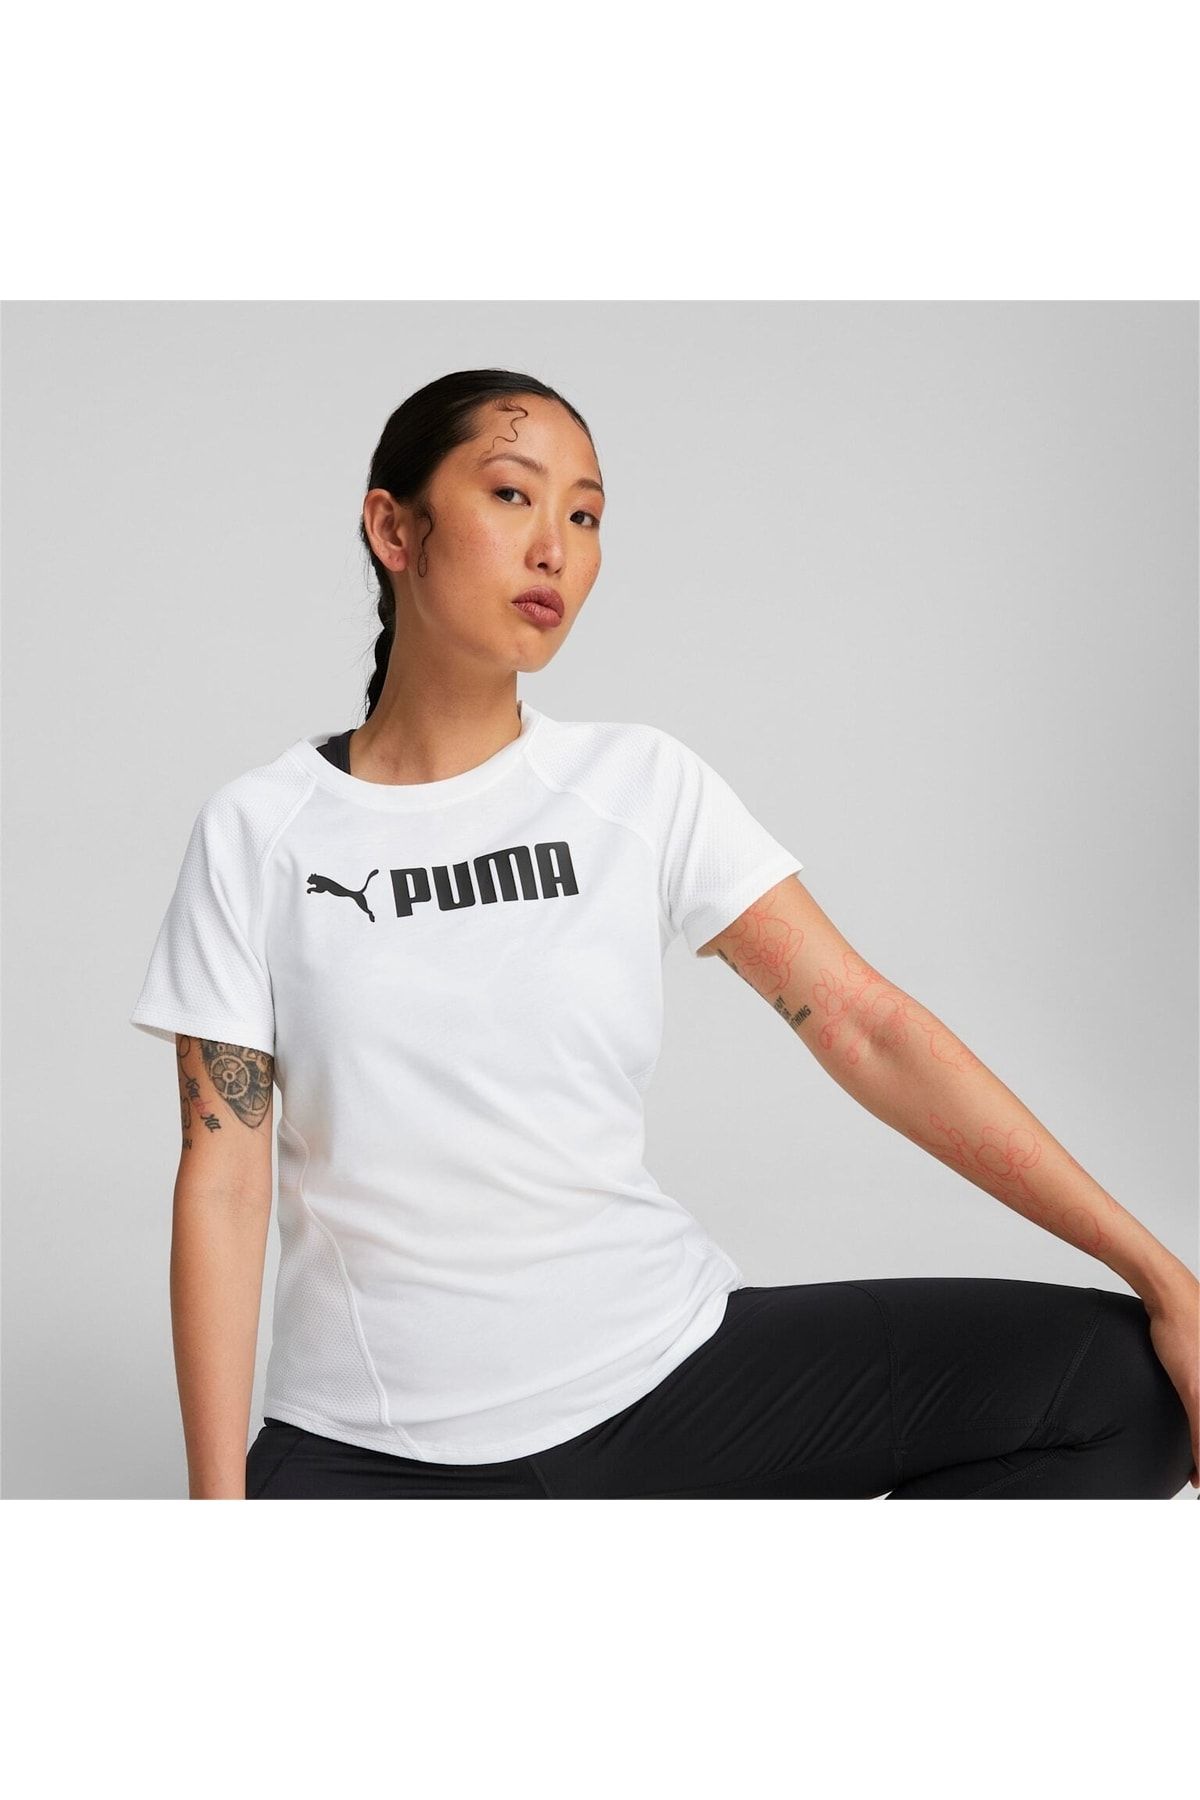 Puma Fit Logo Beyaz Beyaz Tişört (522181-02)